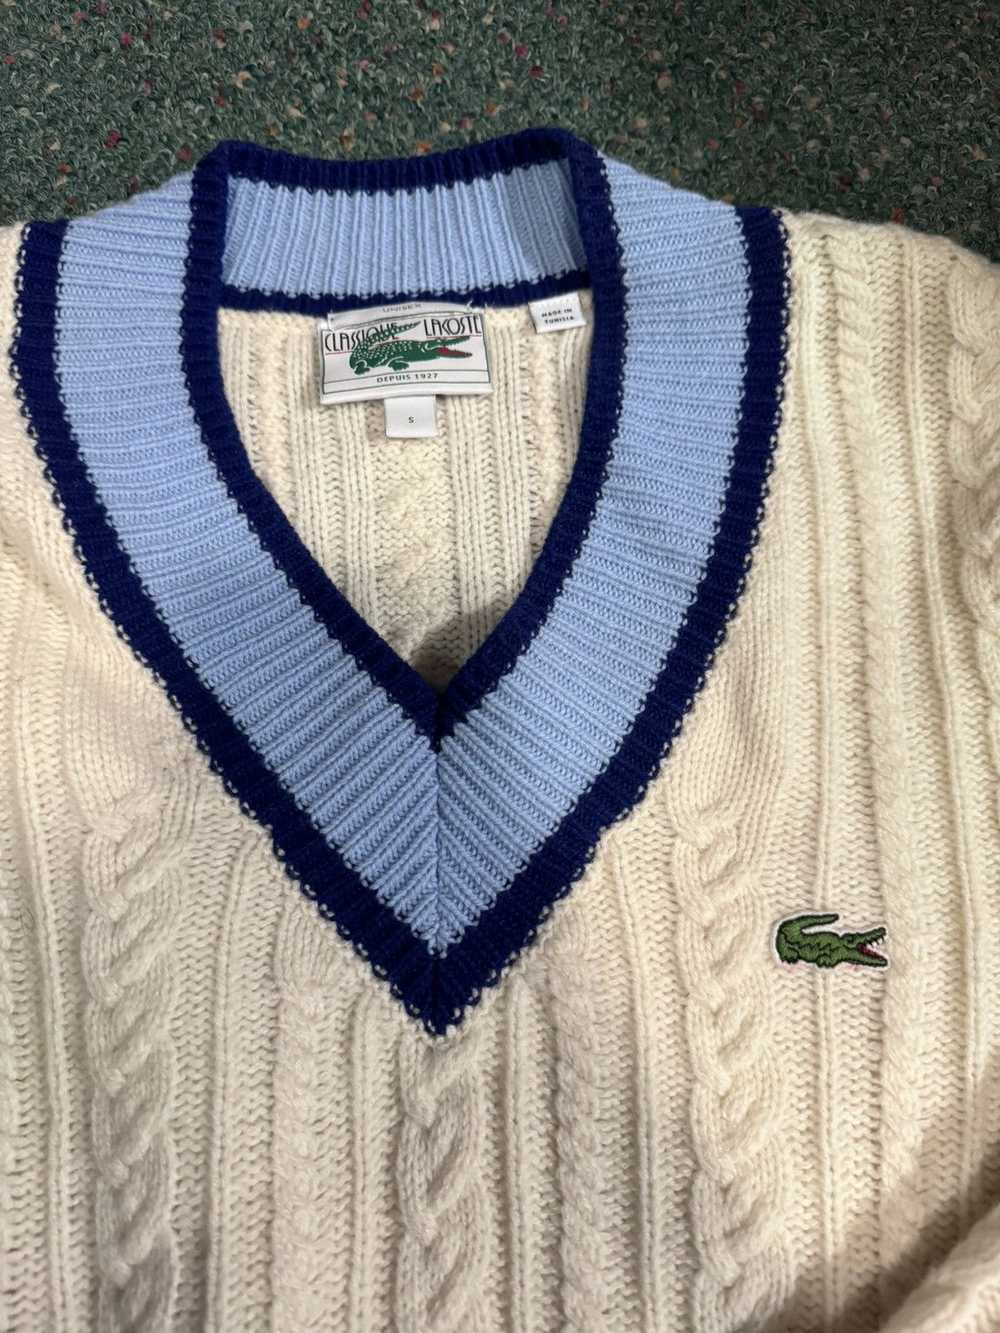 Lacoste Lacoste v neck cricket sweater - image 2